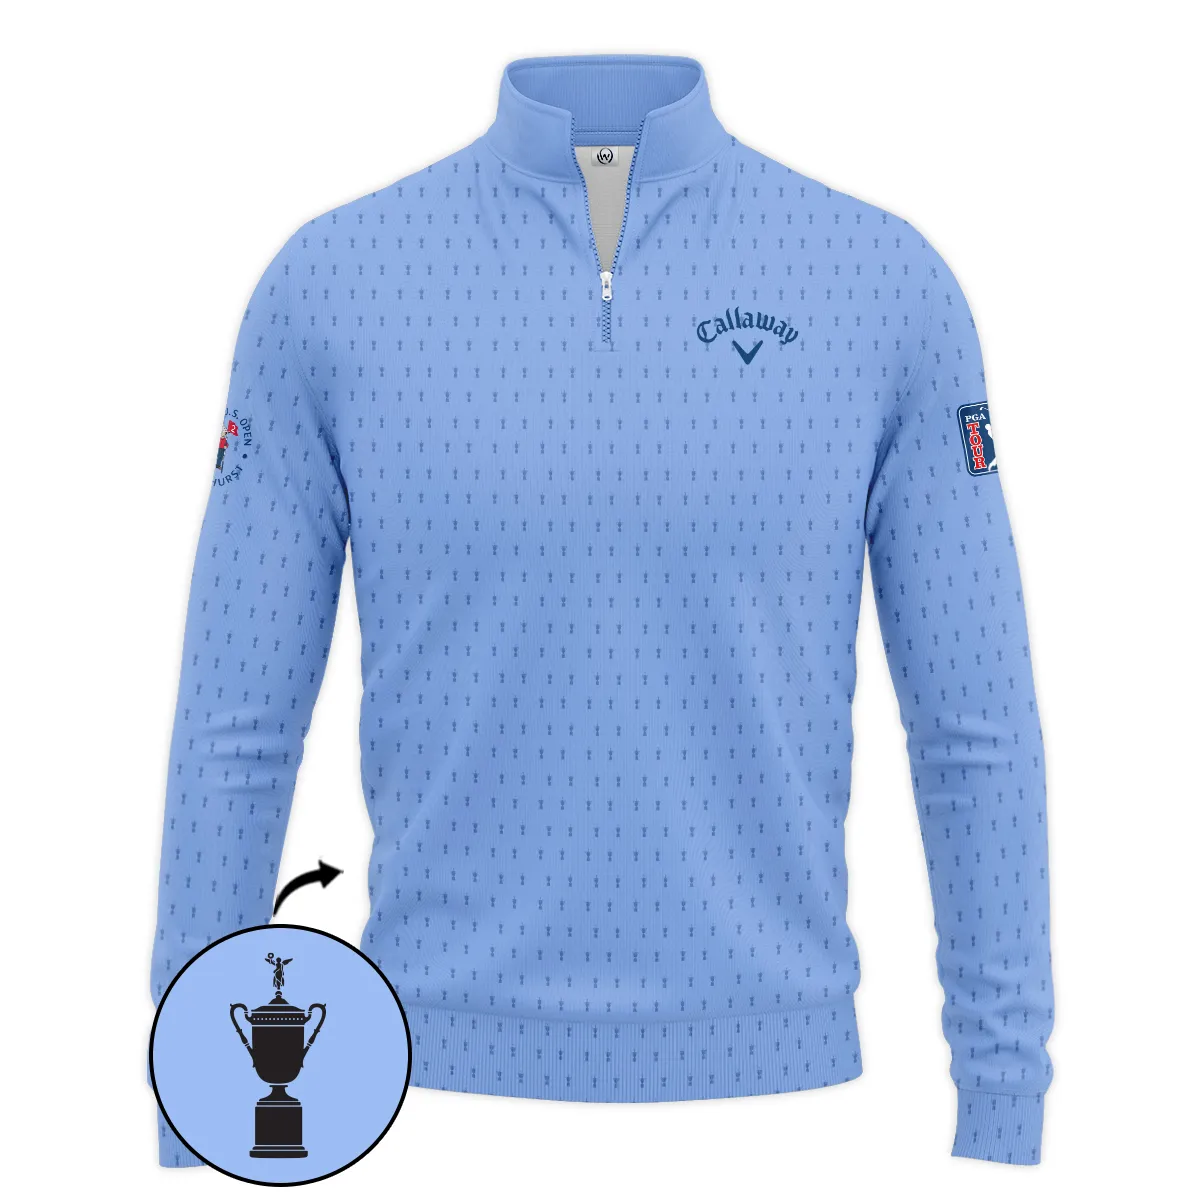 Golf Pattern Cup Blue 124th U.S. Open Pinehurst Pinehurst Callaway Zipper Polo Shirt Style Classic